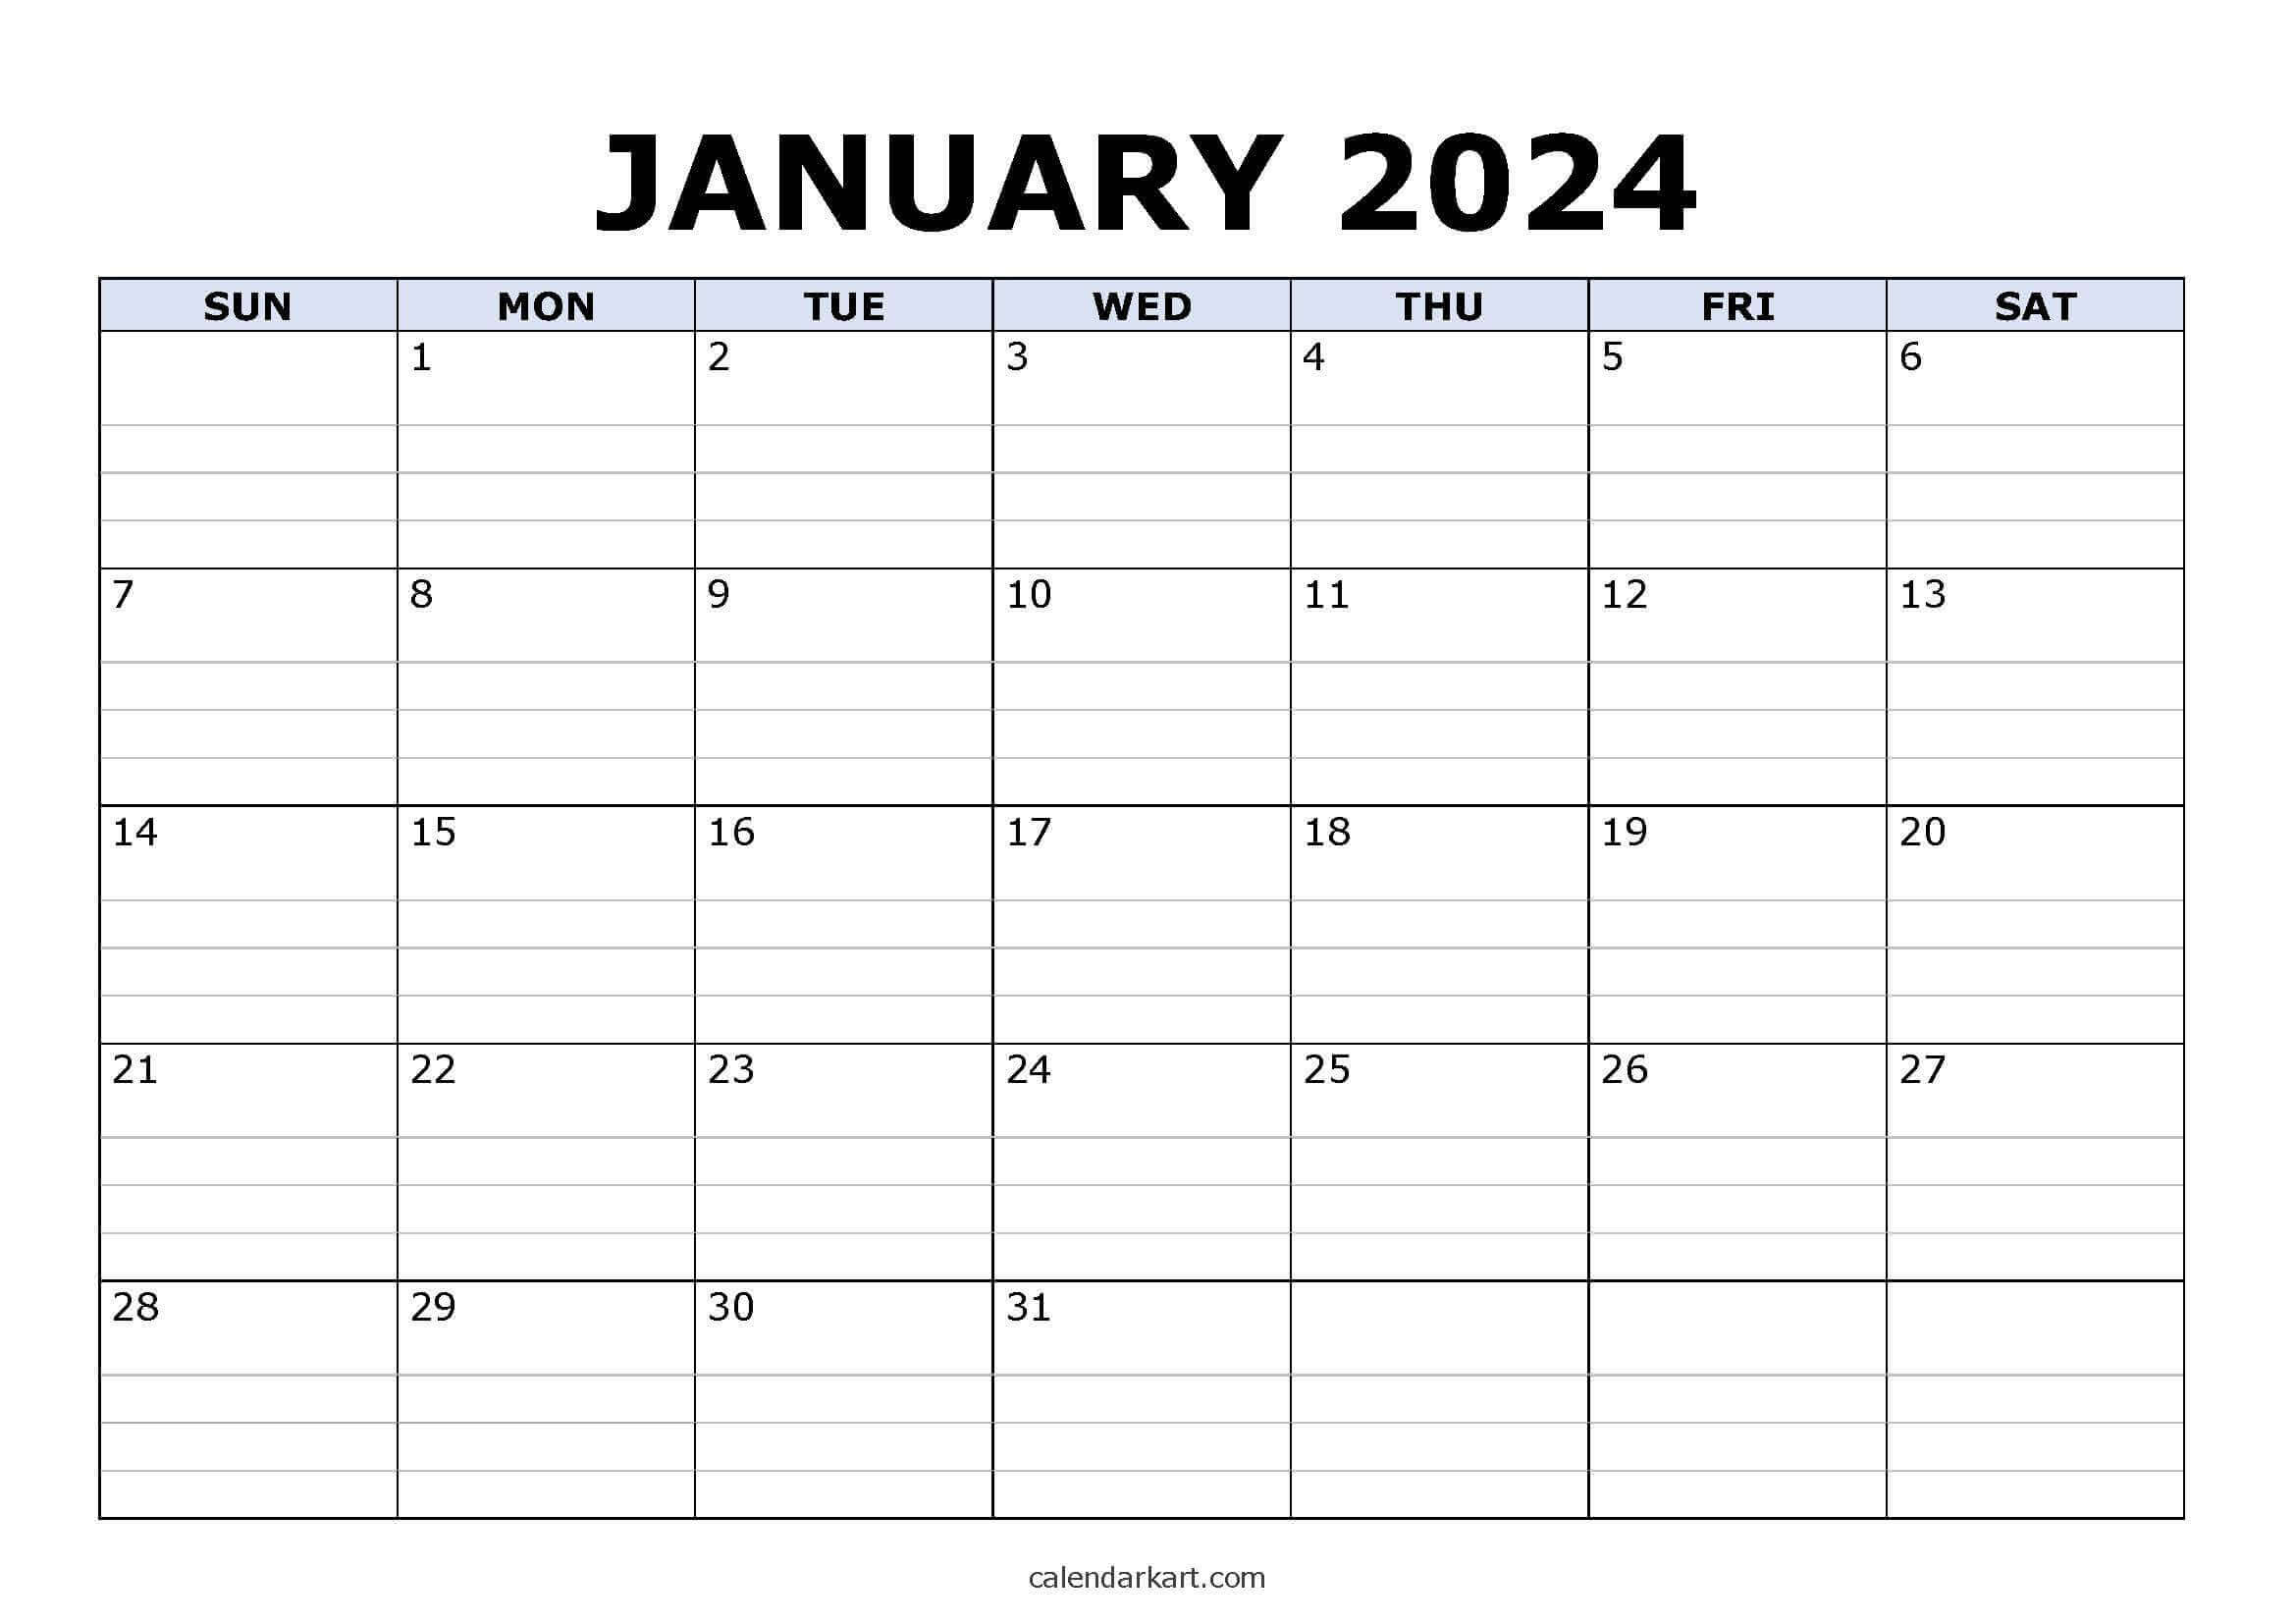 Free Printable January 2024 Calendars - Calendarkart | Free Printable Lined Monthly Calendar 2024